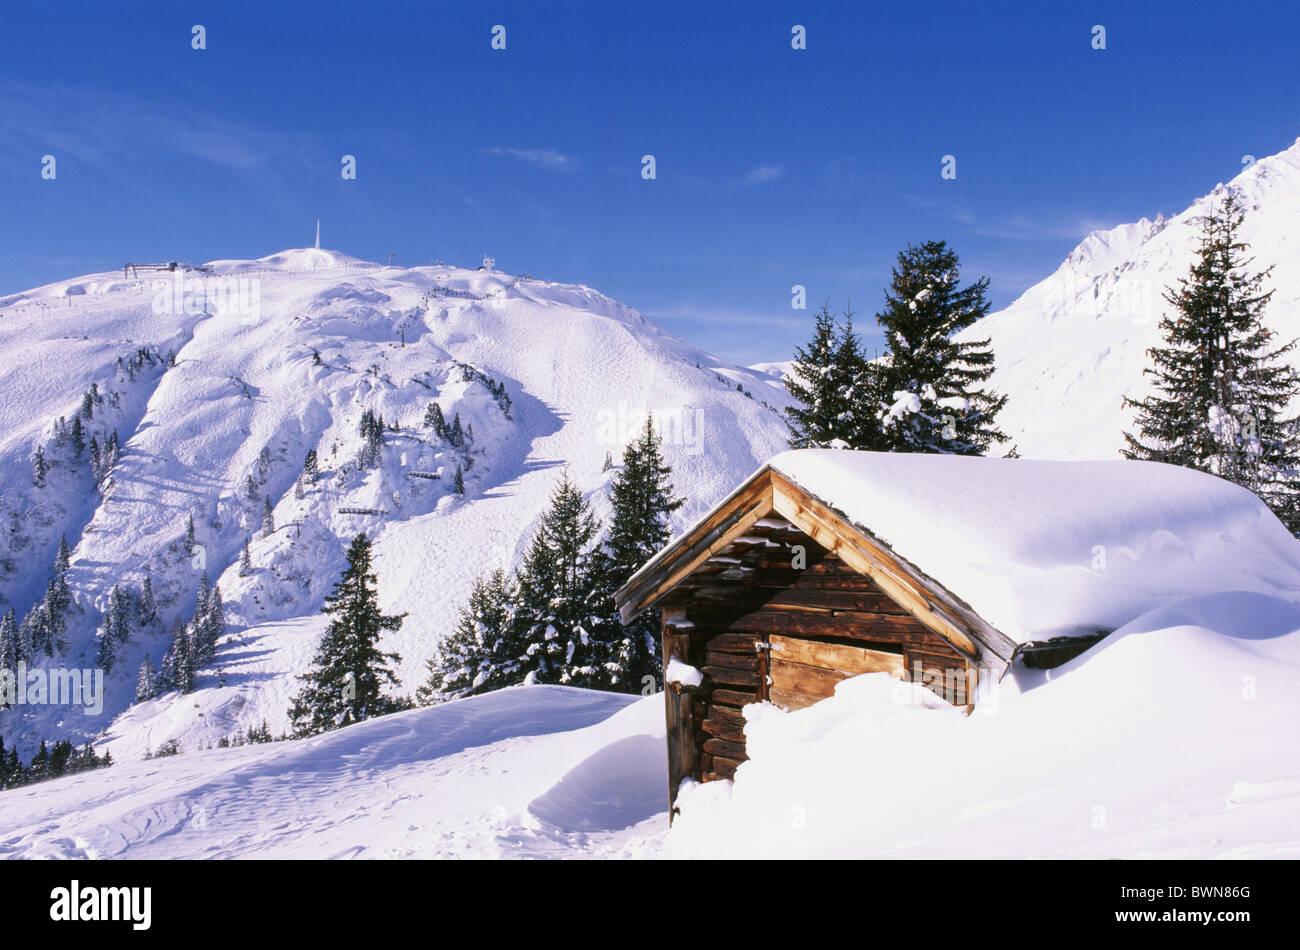 Europa Austria Tirol St. Anton am Arlberg montagna baita di montagna casa cabina Europa travel snow landscape s Foto Stock